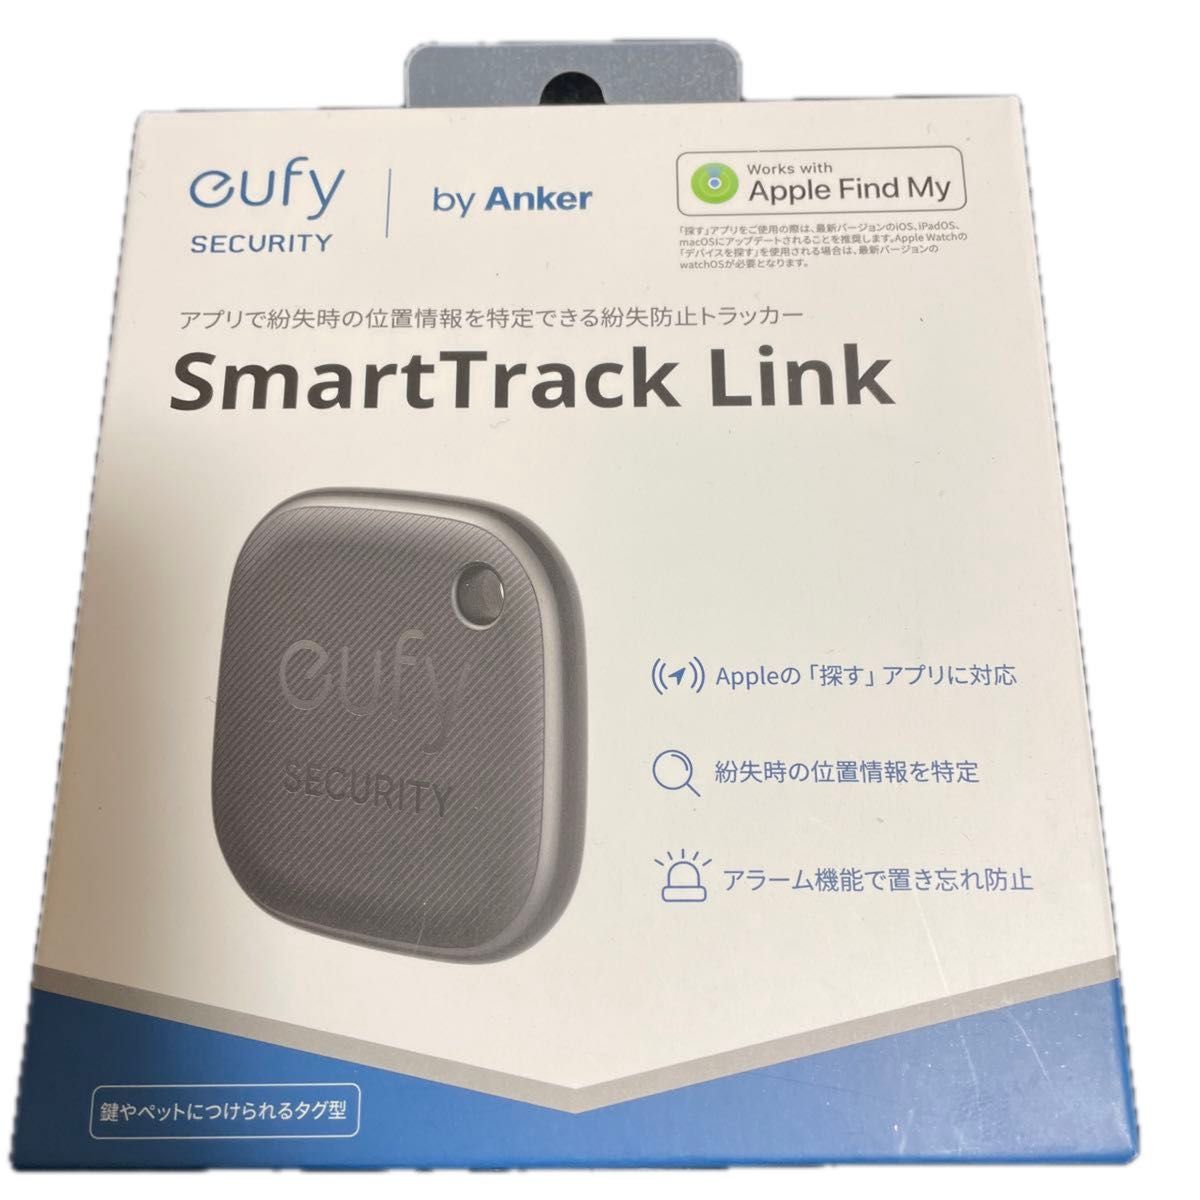 Anker Eufy (ユーフィ) Security SmartTrack Link （紛失防止トラッカー） なくしものが無くなる